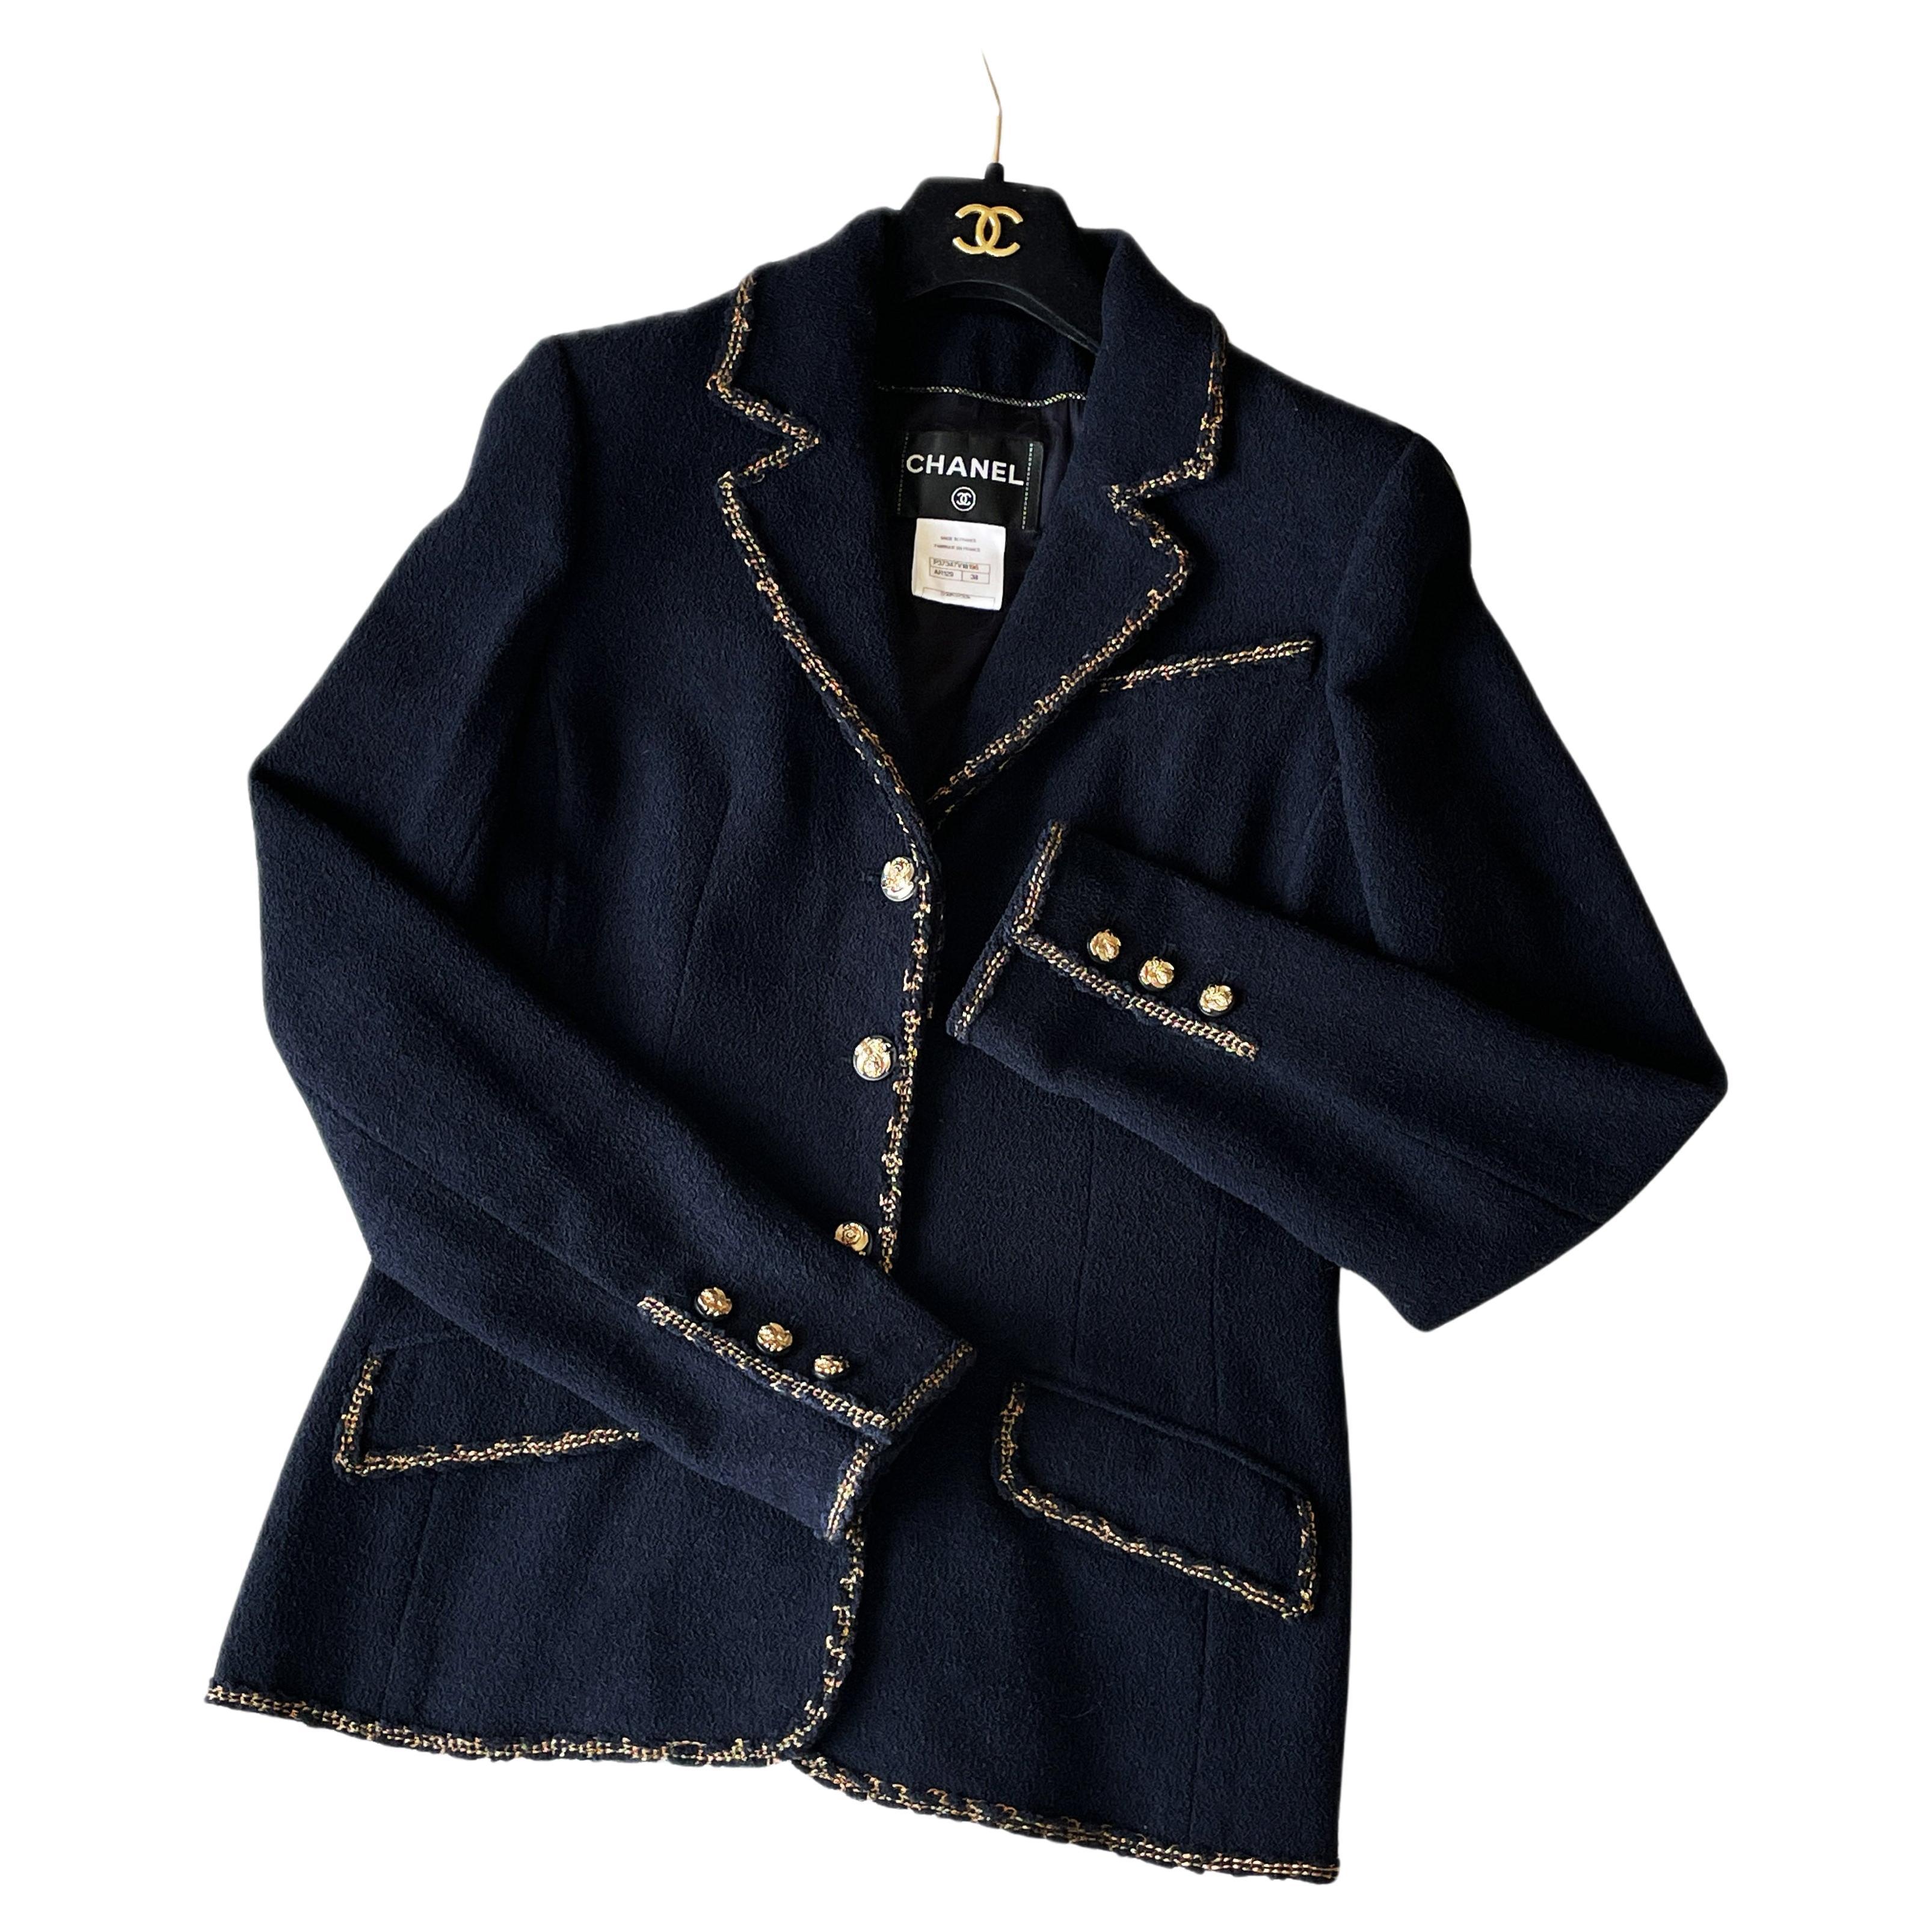 Chanel Iconic Paris / Venice Little Tweed Jacket For Sale